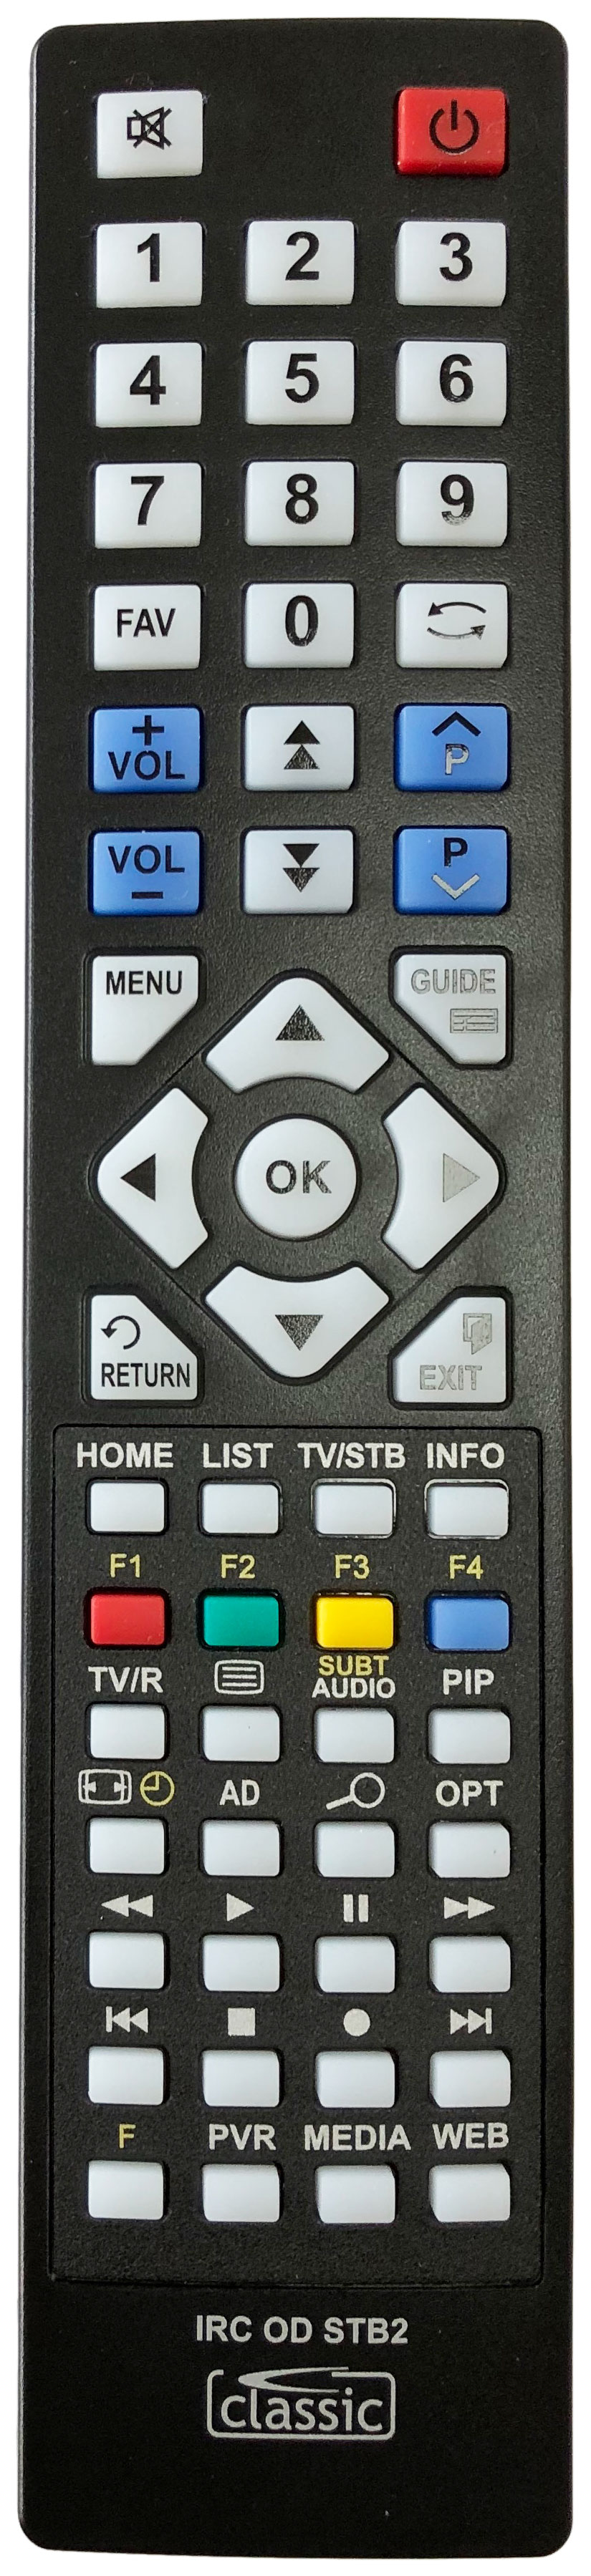 Humax RM-L03 Remote Control Alternative